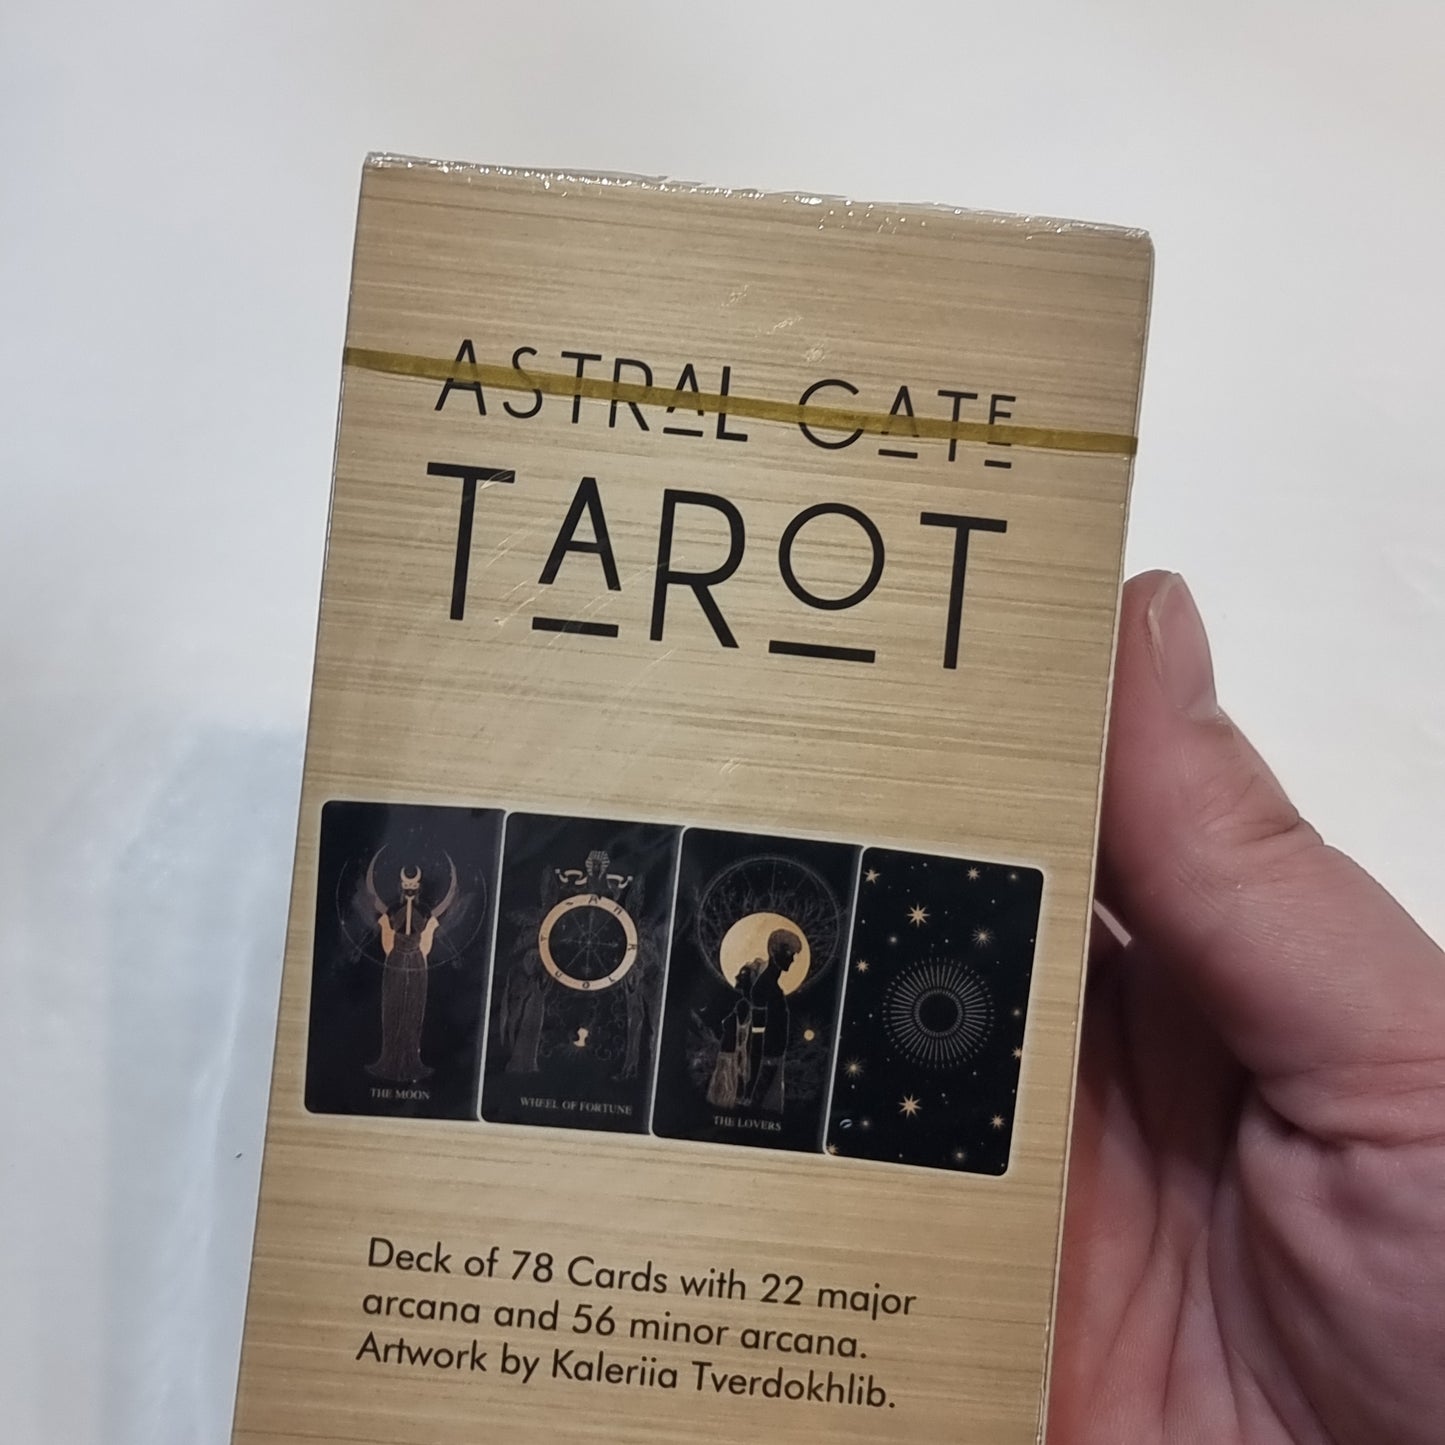 Astral gate tarot deck - Rivendell Shop